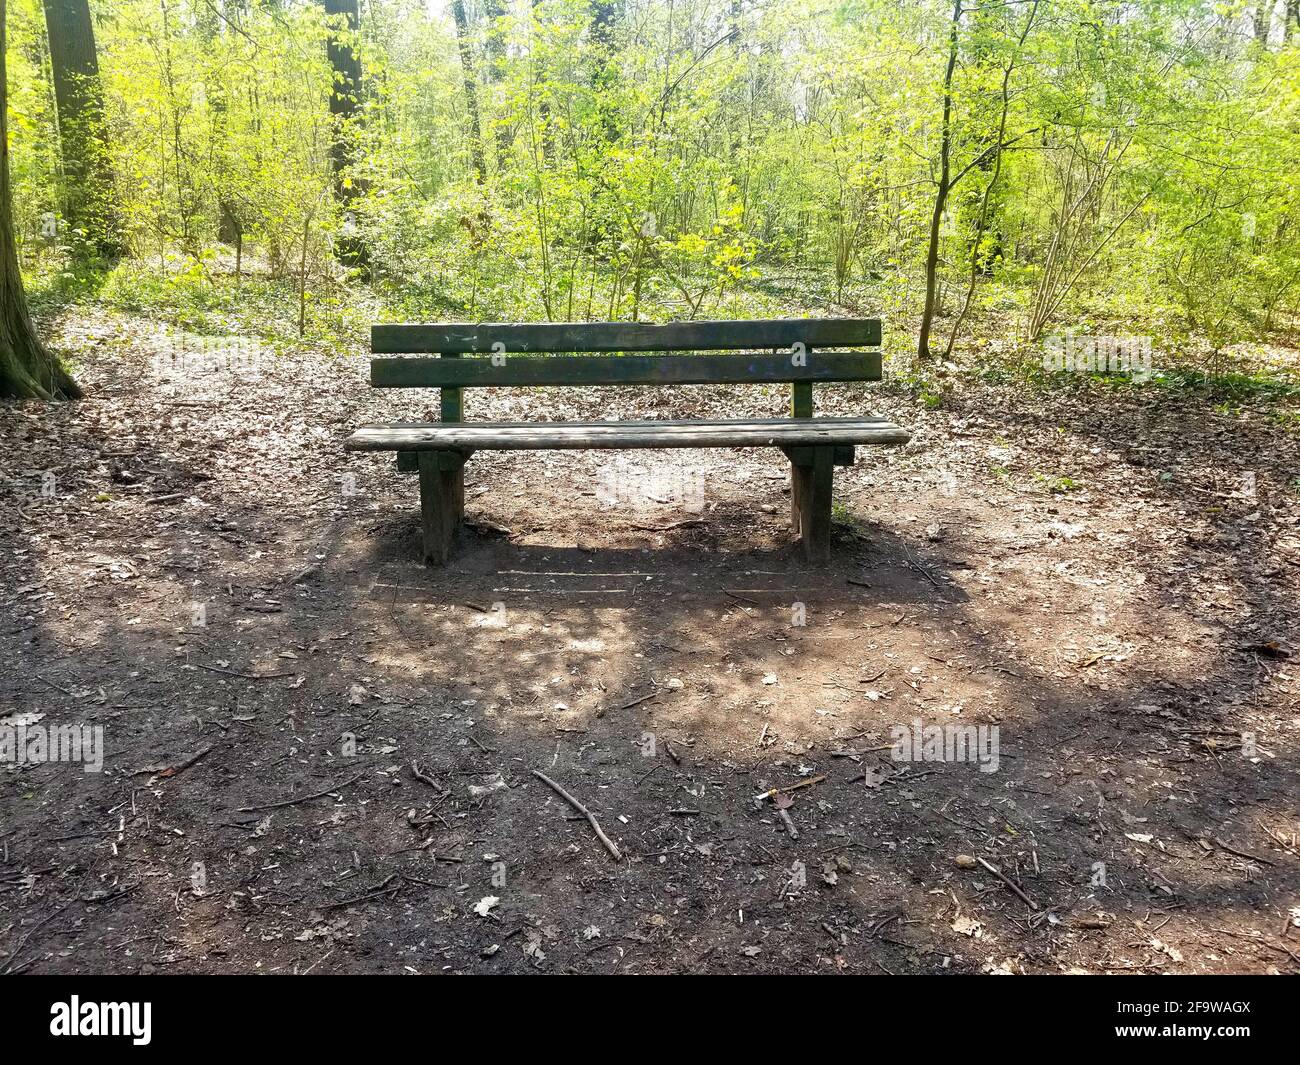 Eine leere Holzbank im Wald Stockfotografie - Alamy